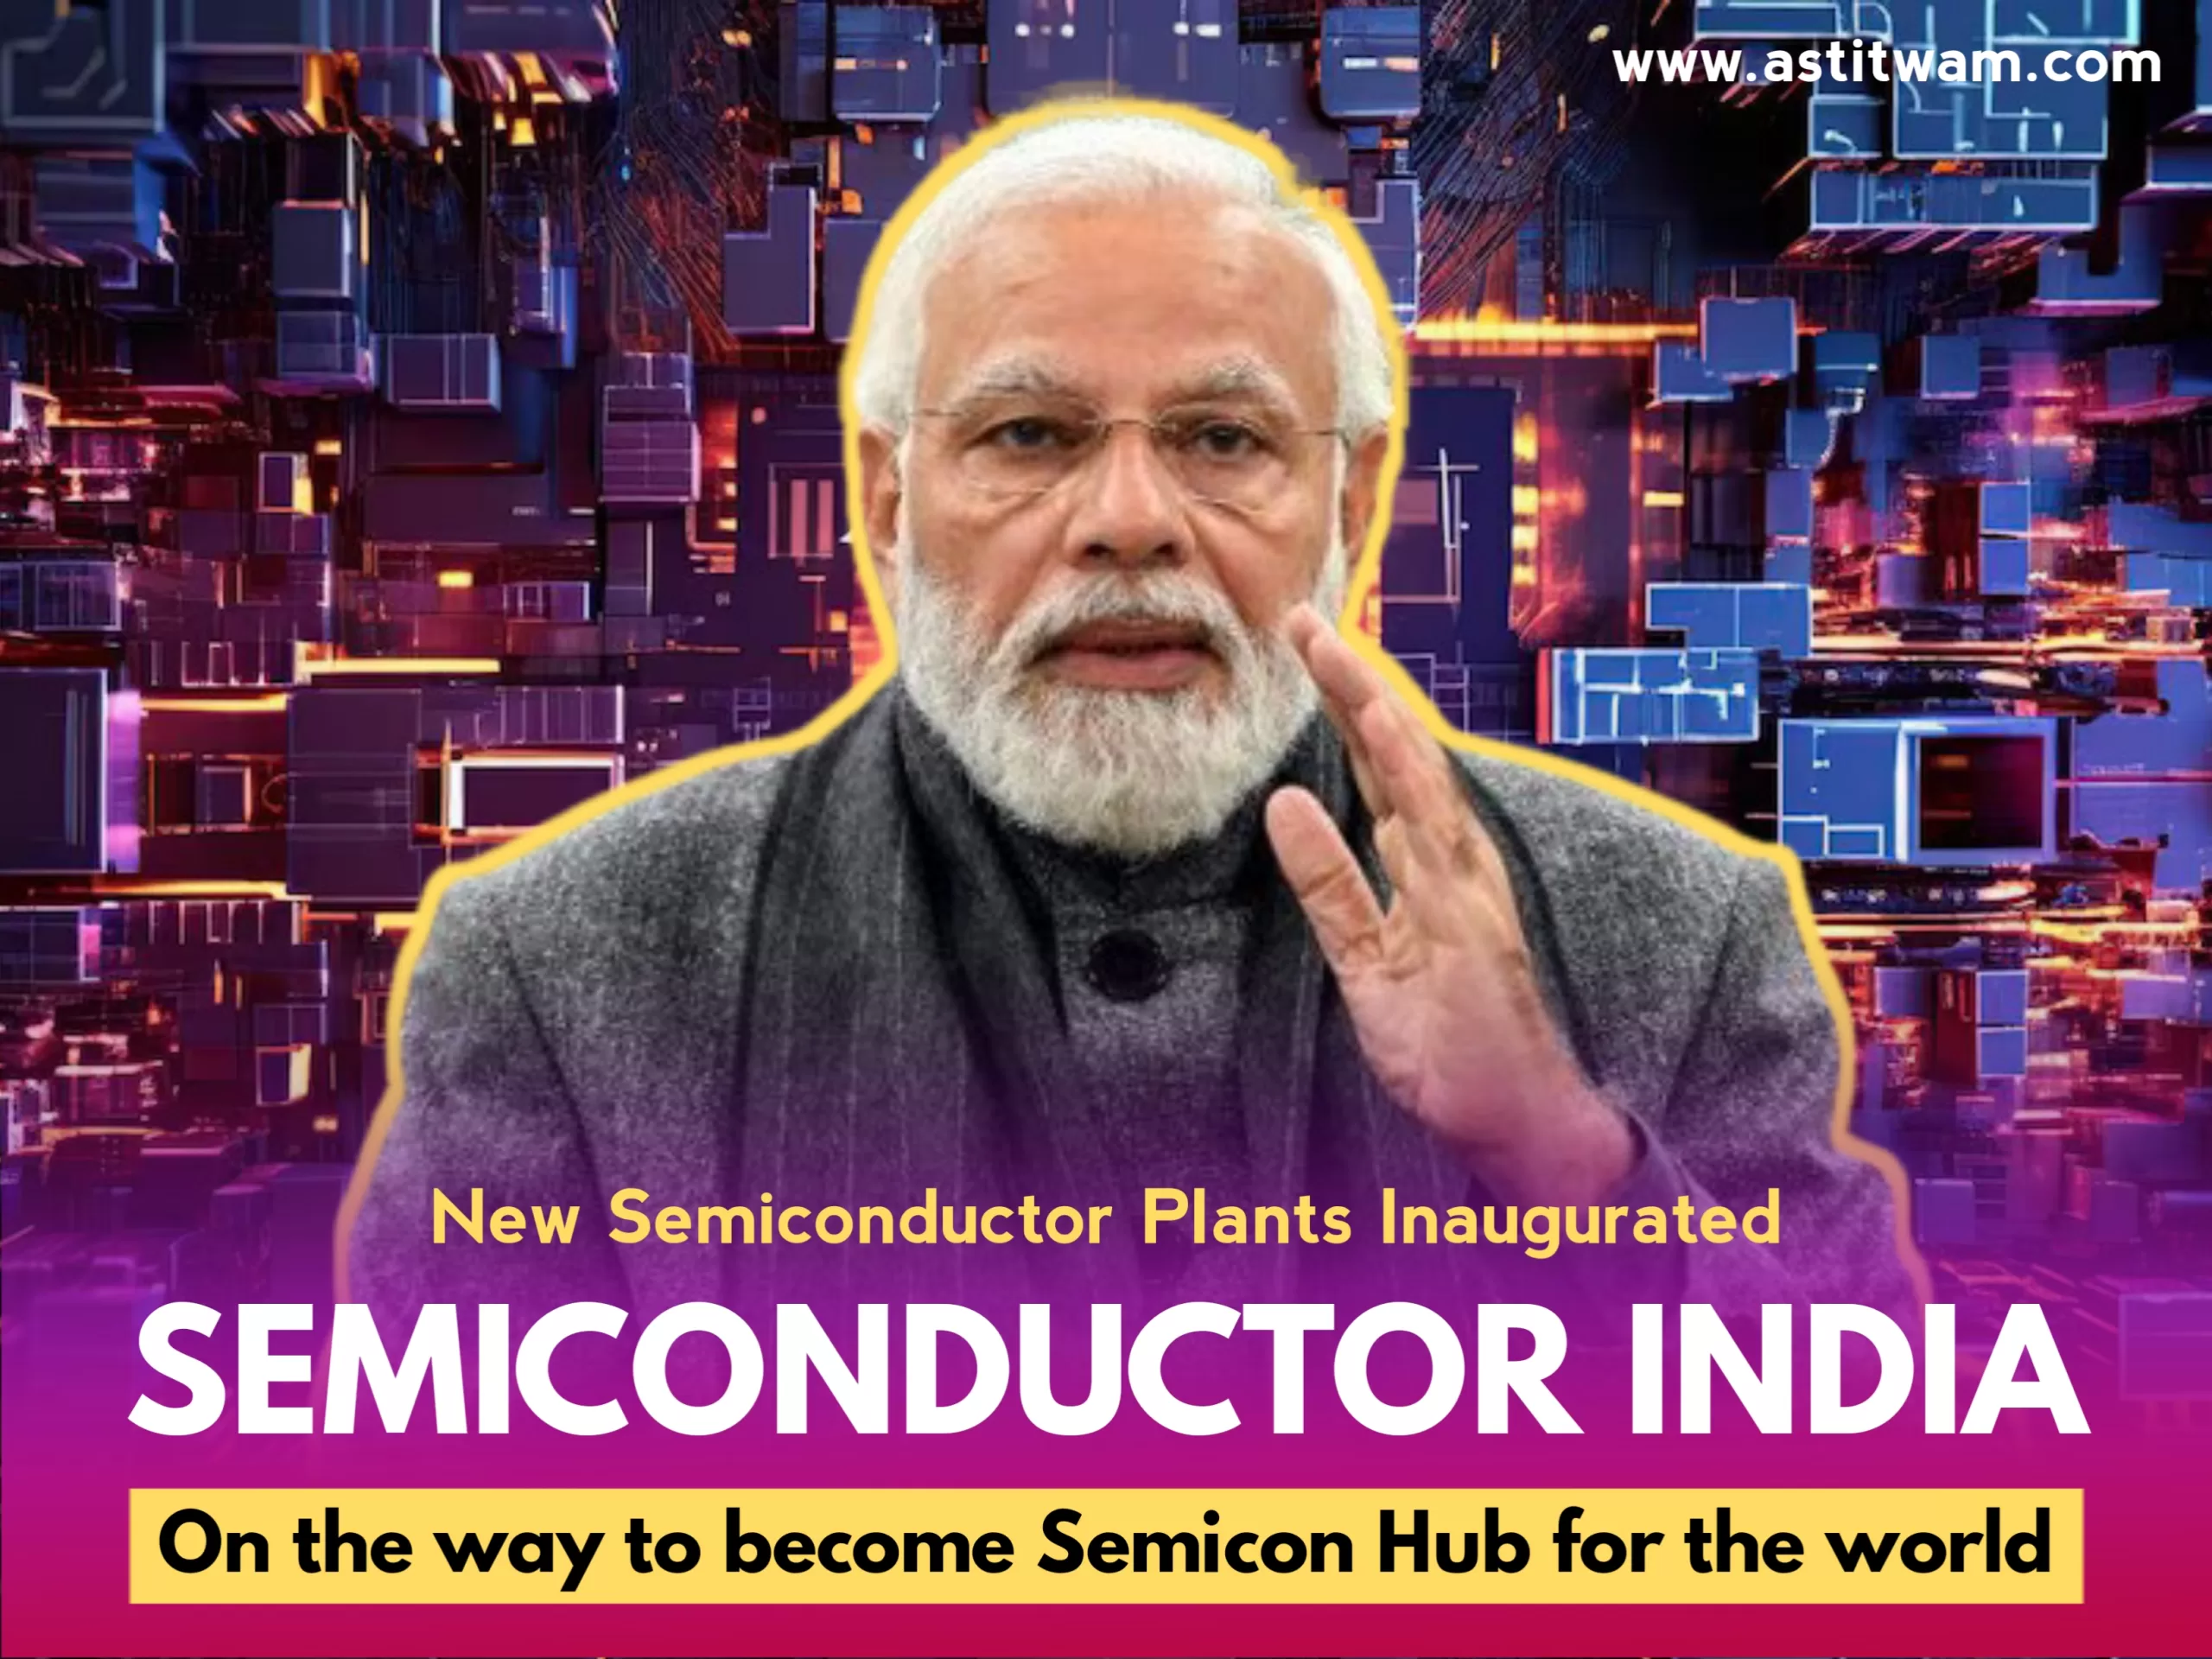 India Semiconductor